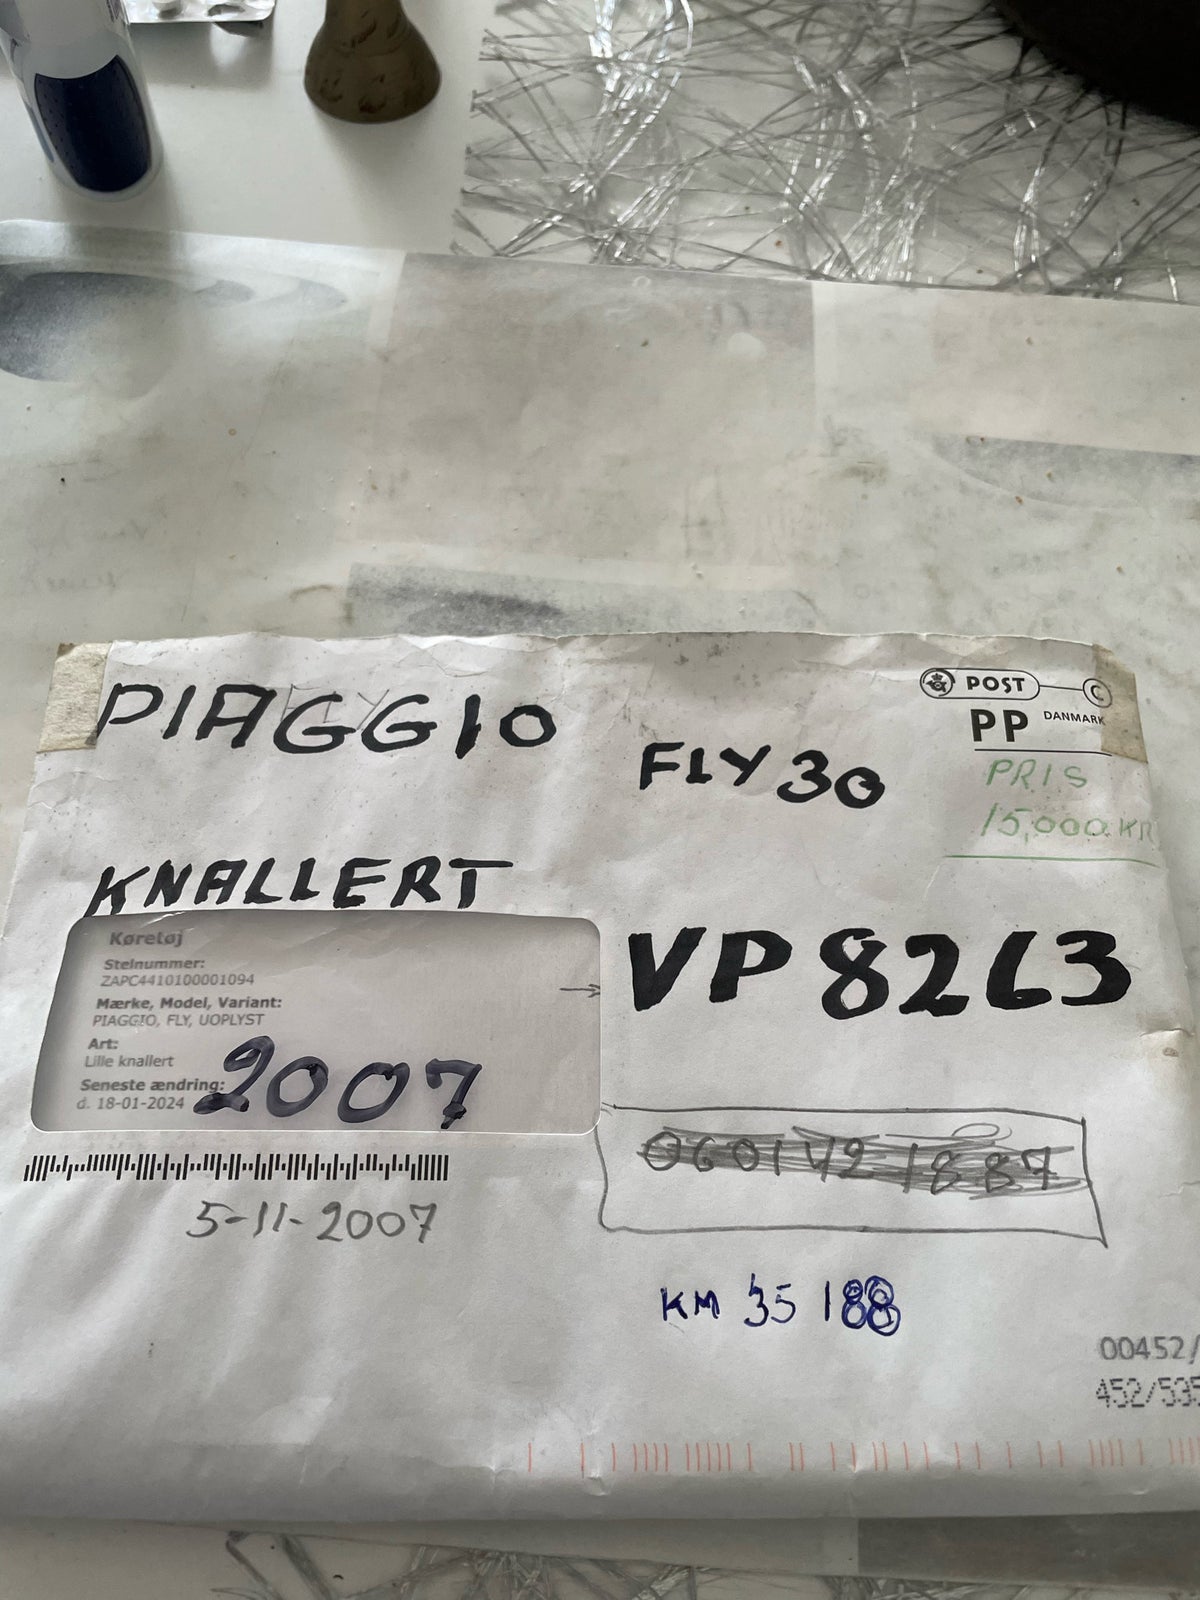 Puch piaggo fly30, 2007, 35,188 km